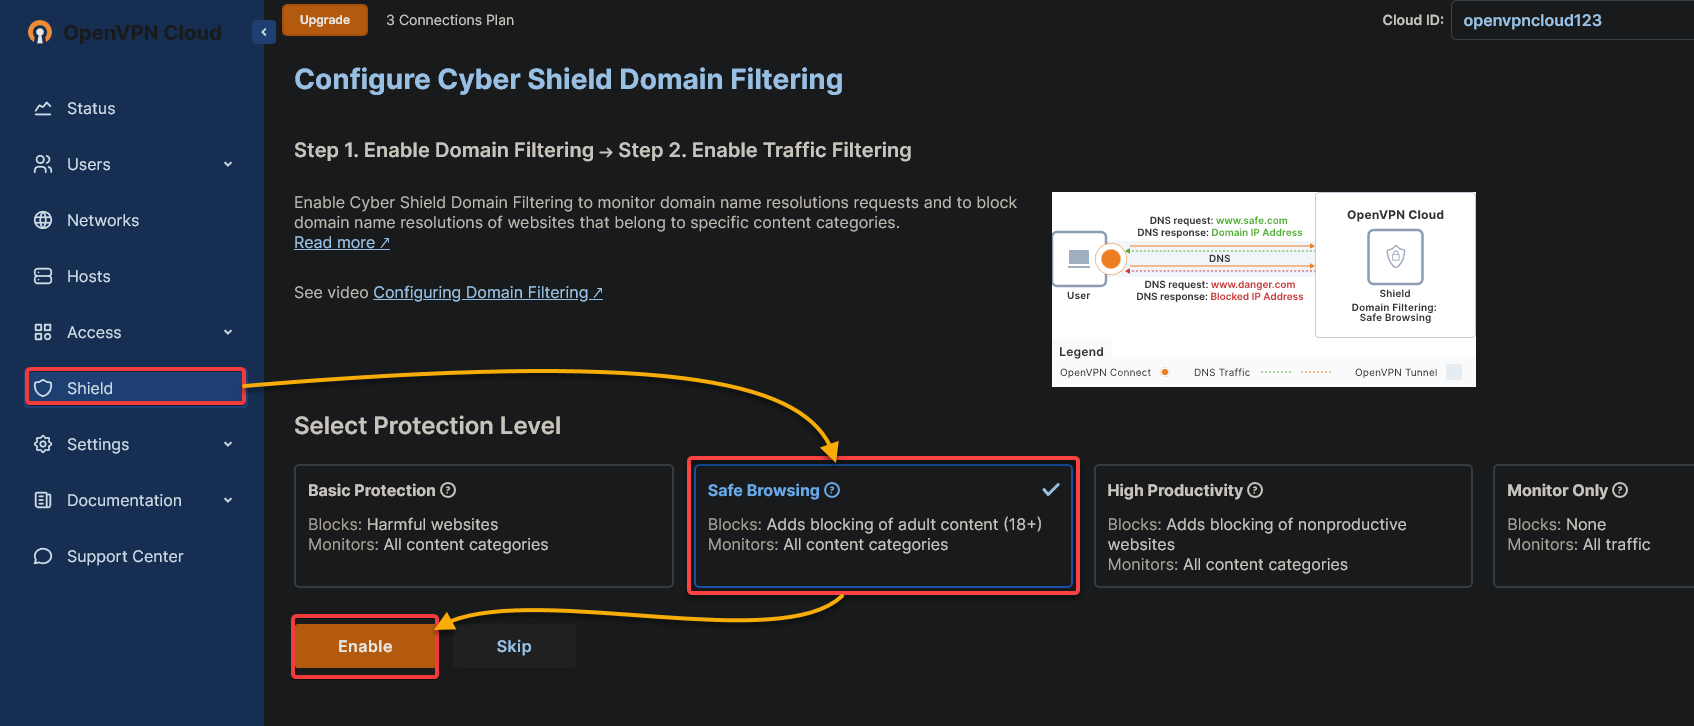 Enabling Cyber Shield Domain Filtering